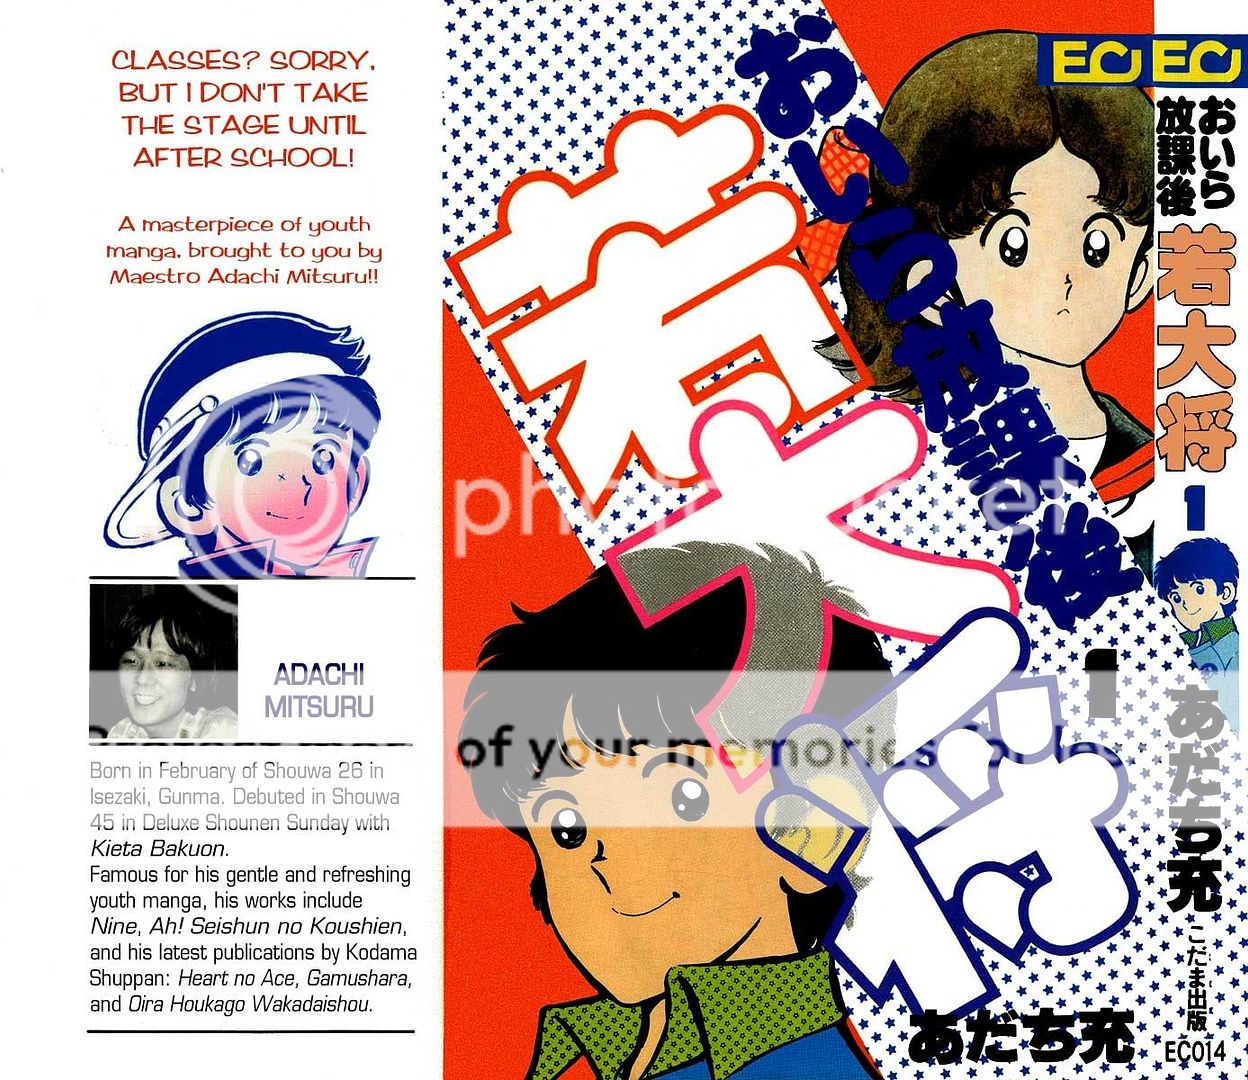 [Game]Nối tên manga/anime/character(s) - Page 4 OHW-v01-c01-p000